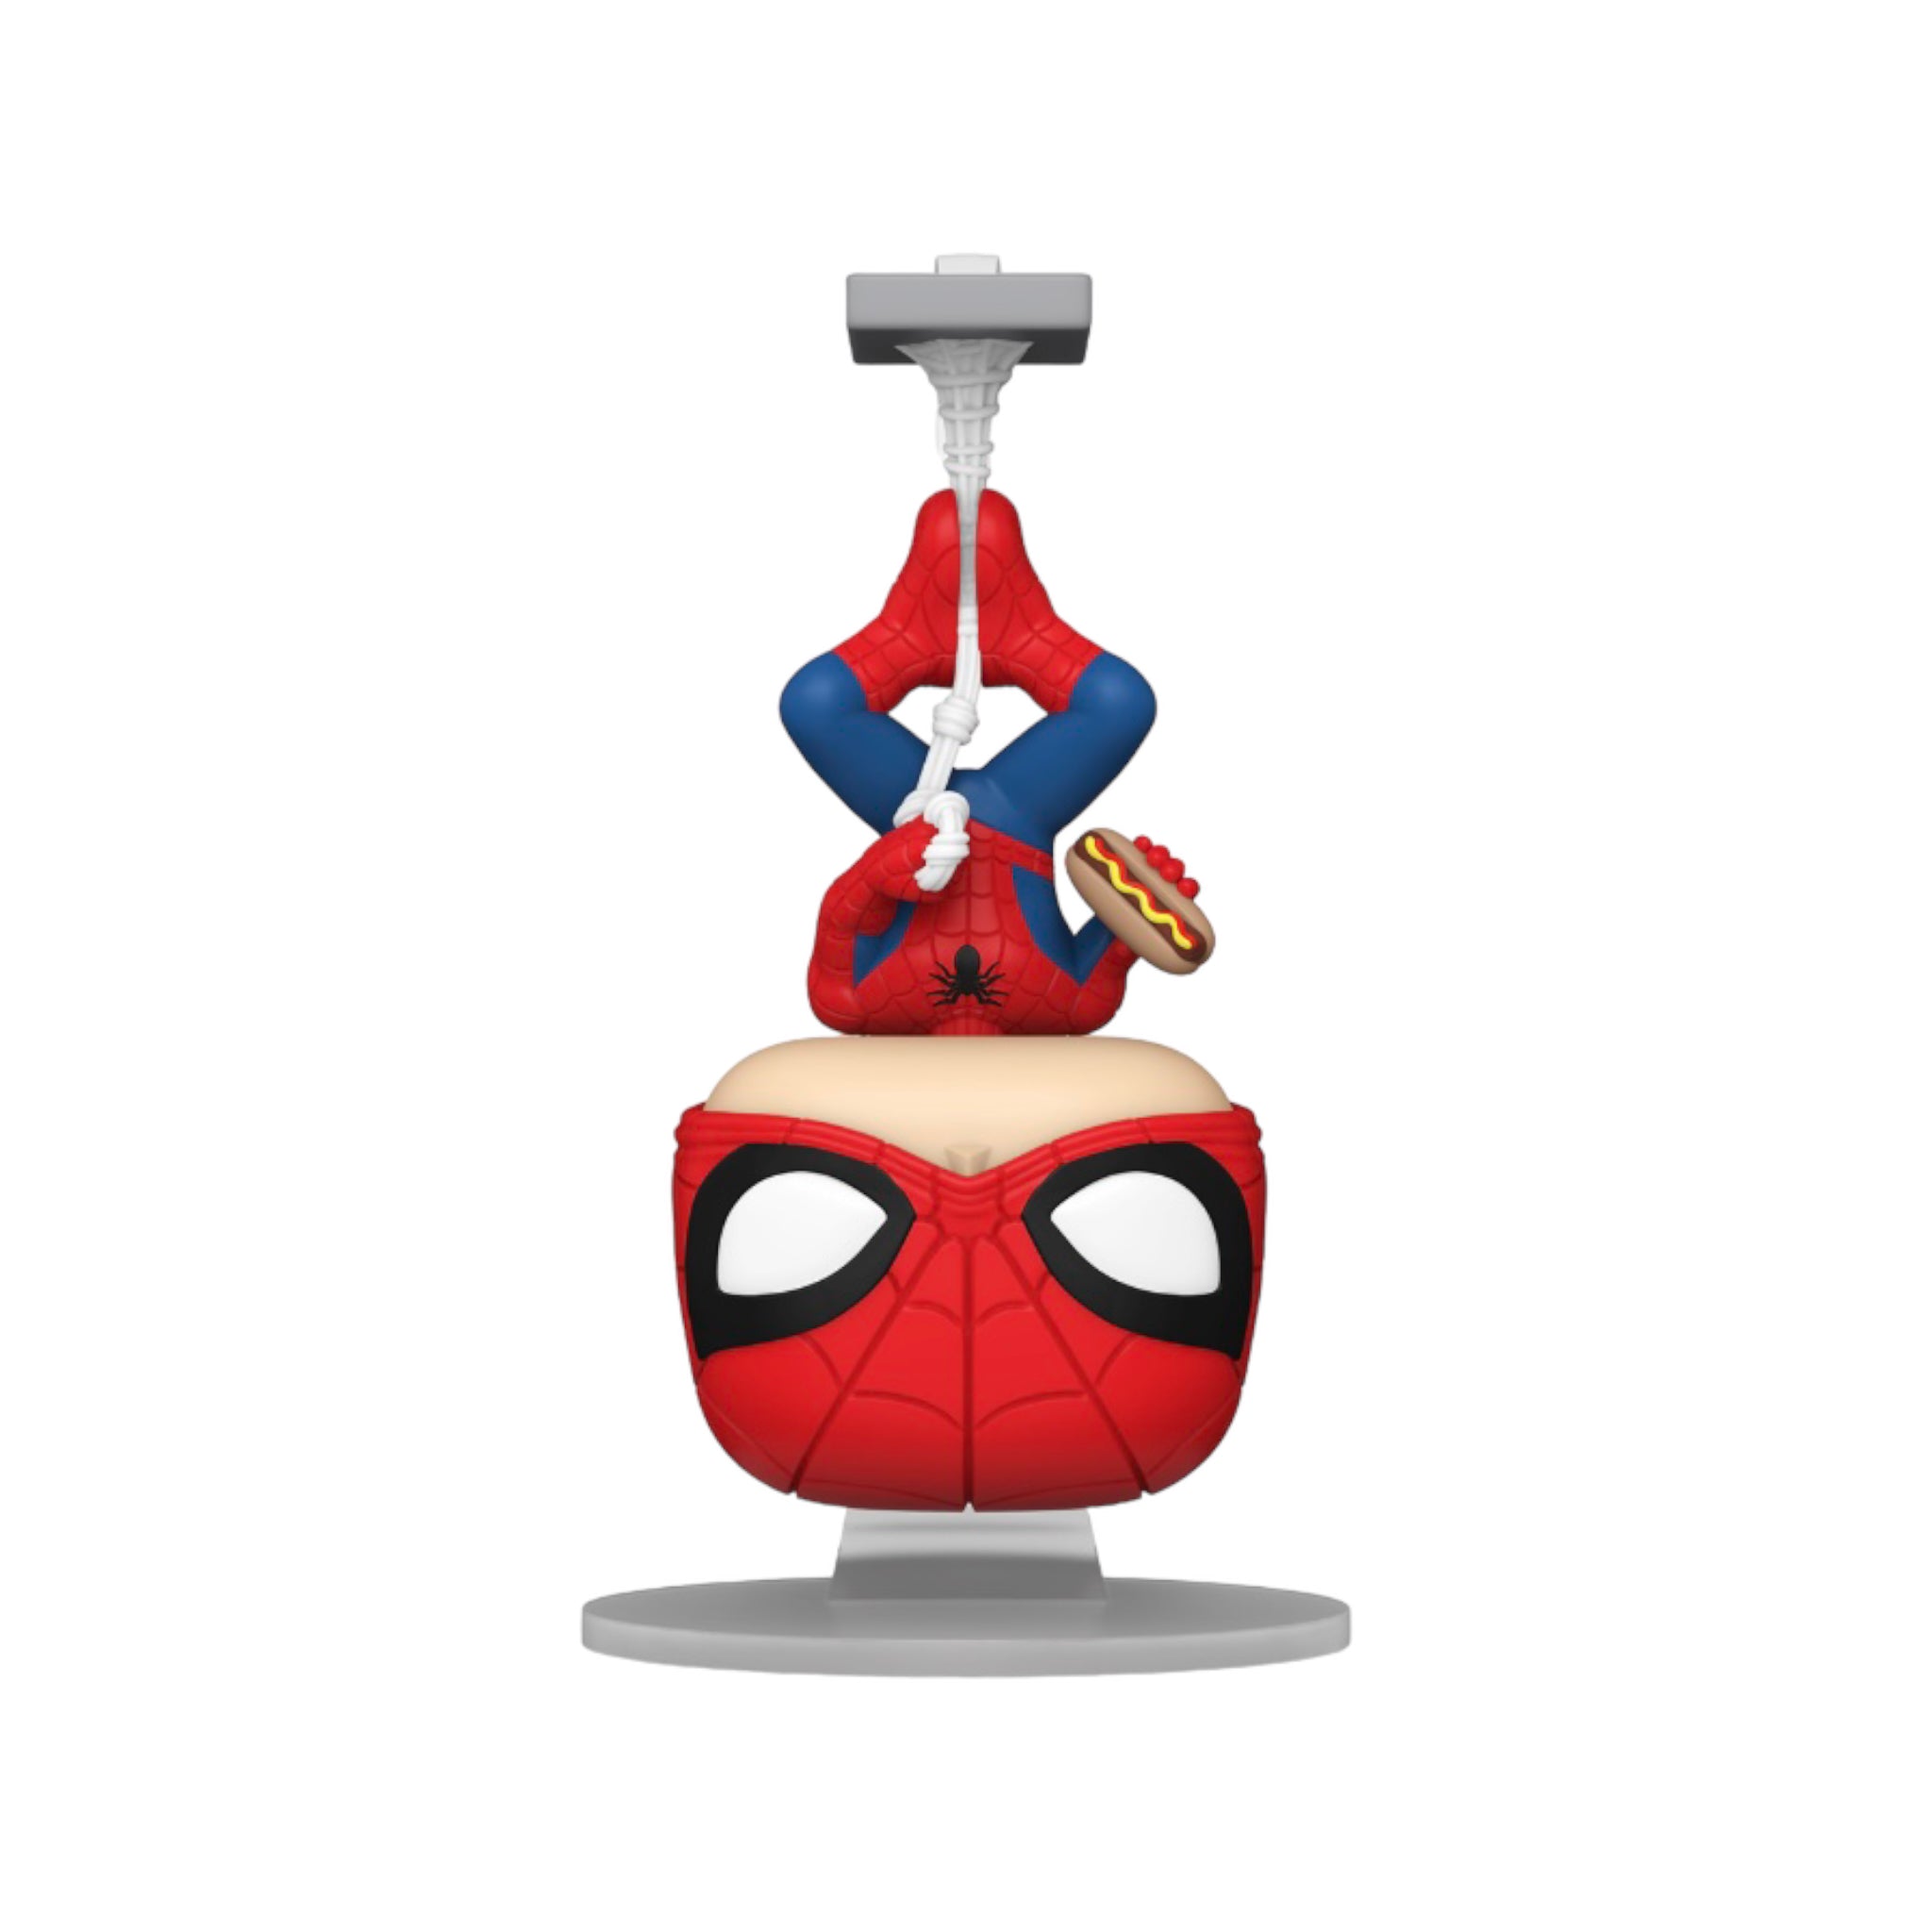 Spider-Man #1357 (Hanging) Funko Pop! - Marvel - BoxLunch Exclusive